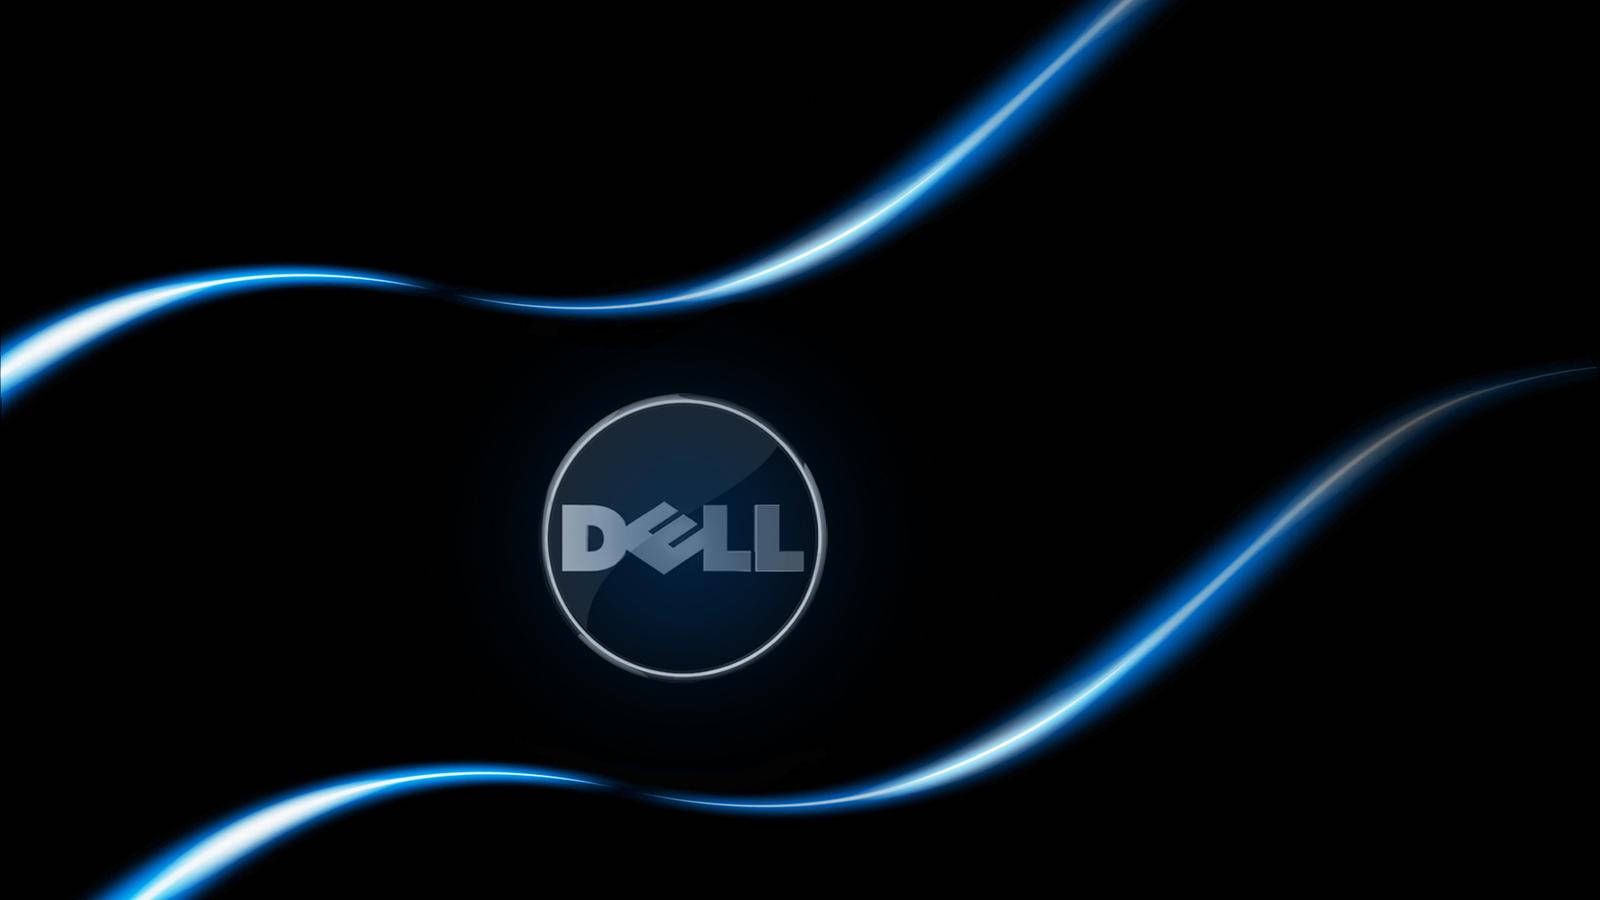  Dell Hintergrundbild 1600x900. Download Blue Rays With Dell HD Logo Wallpaper